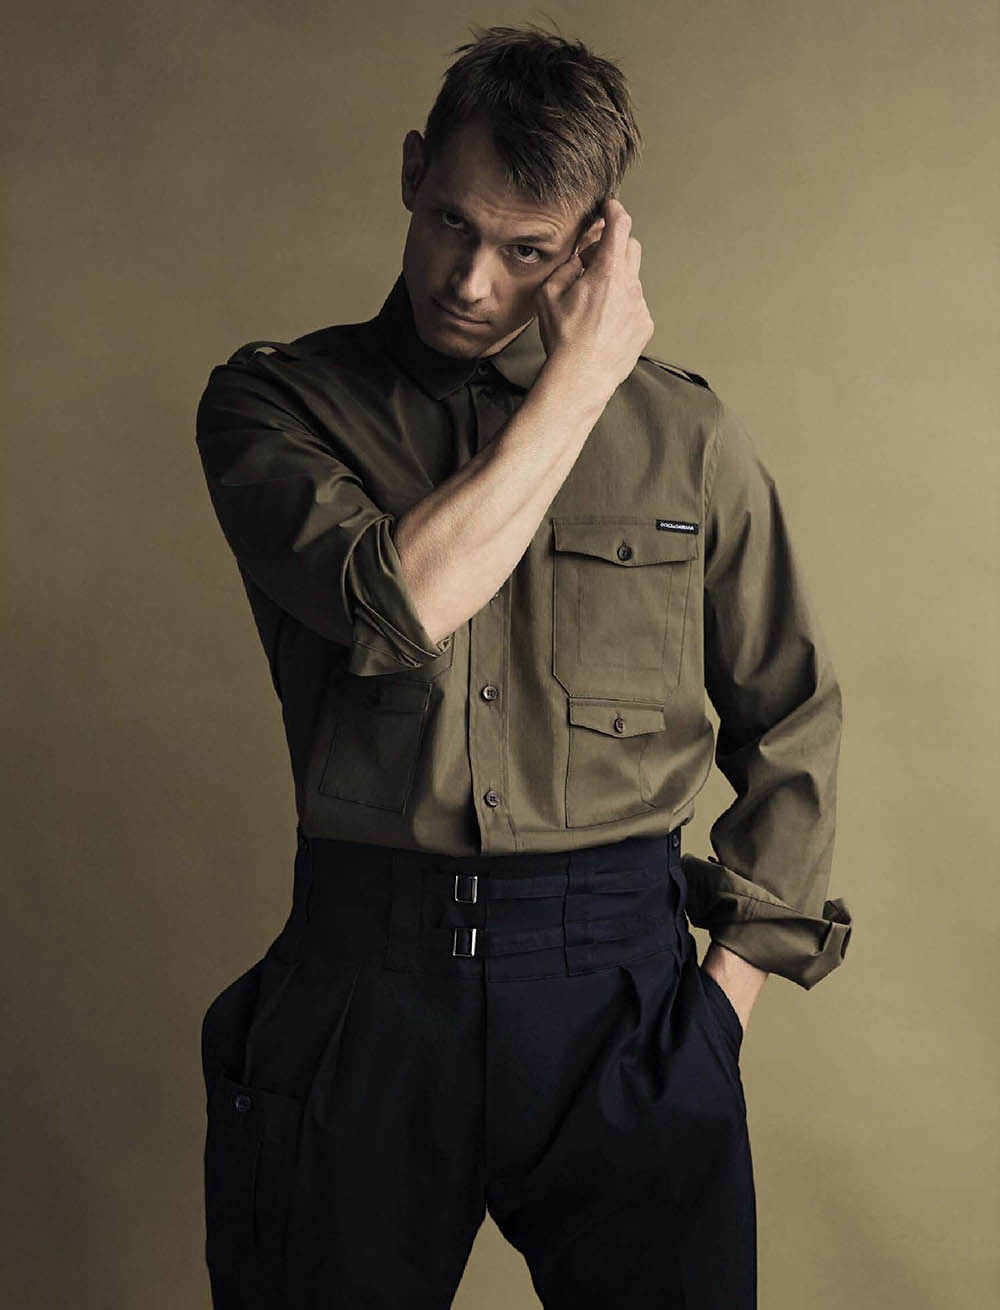 Joel Kinnaman covers L'Uomo Vogue May 2019 by Sølve Sundsbø